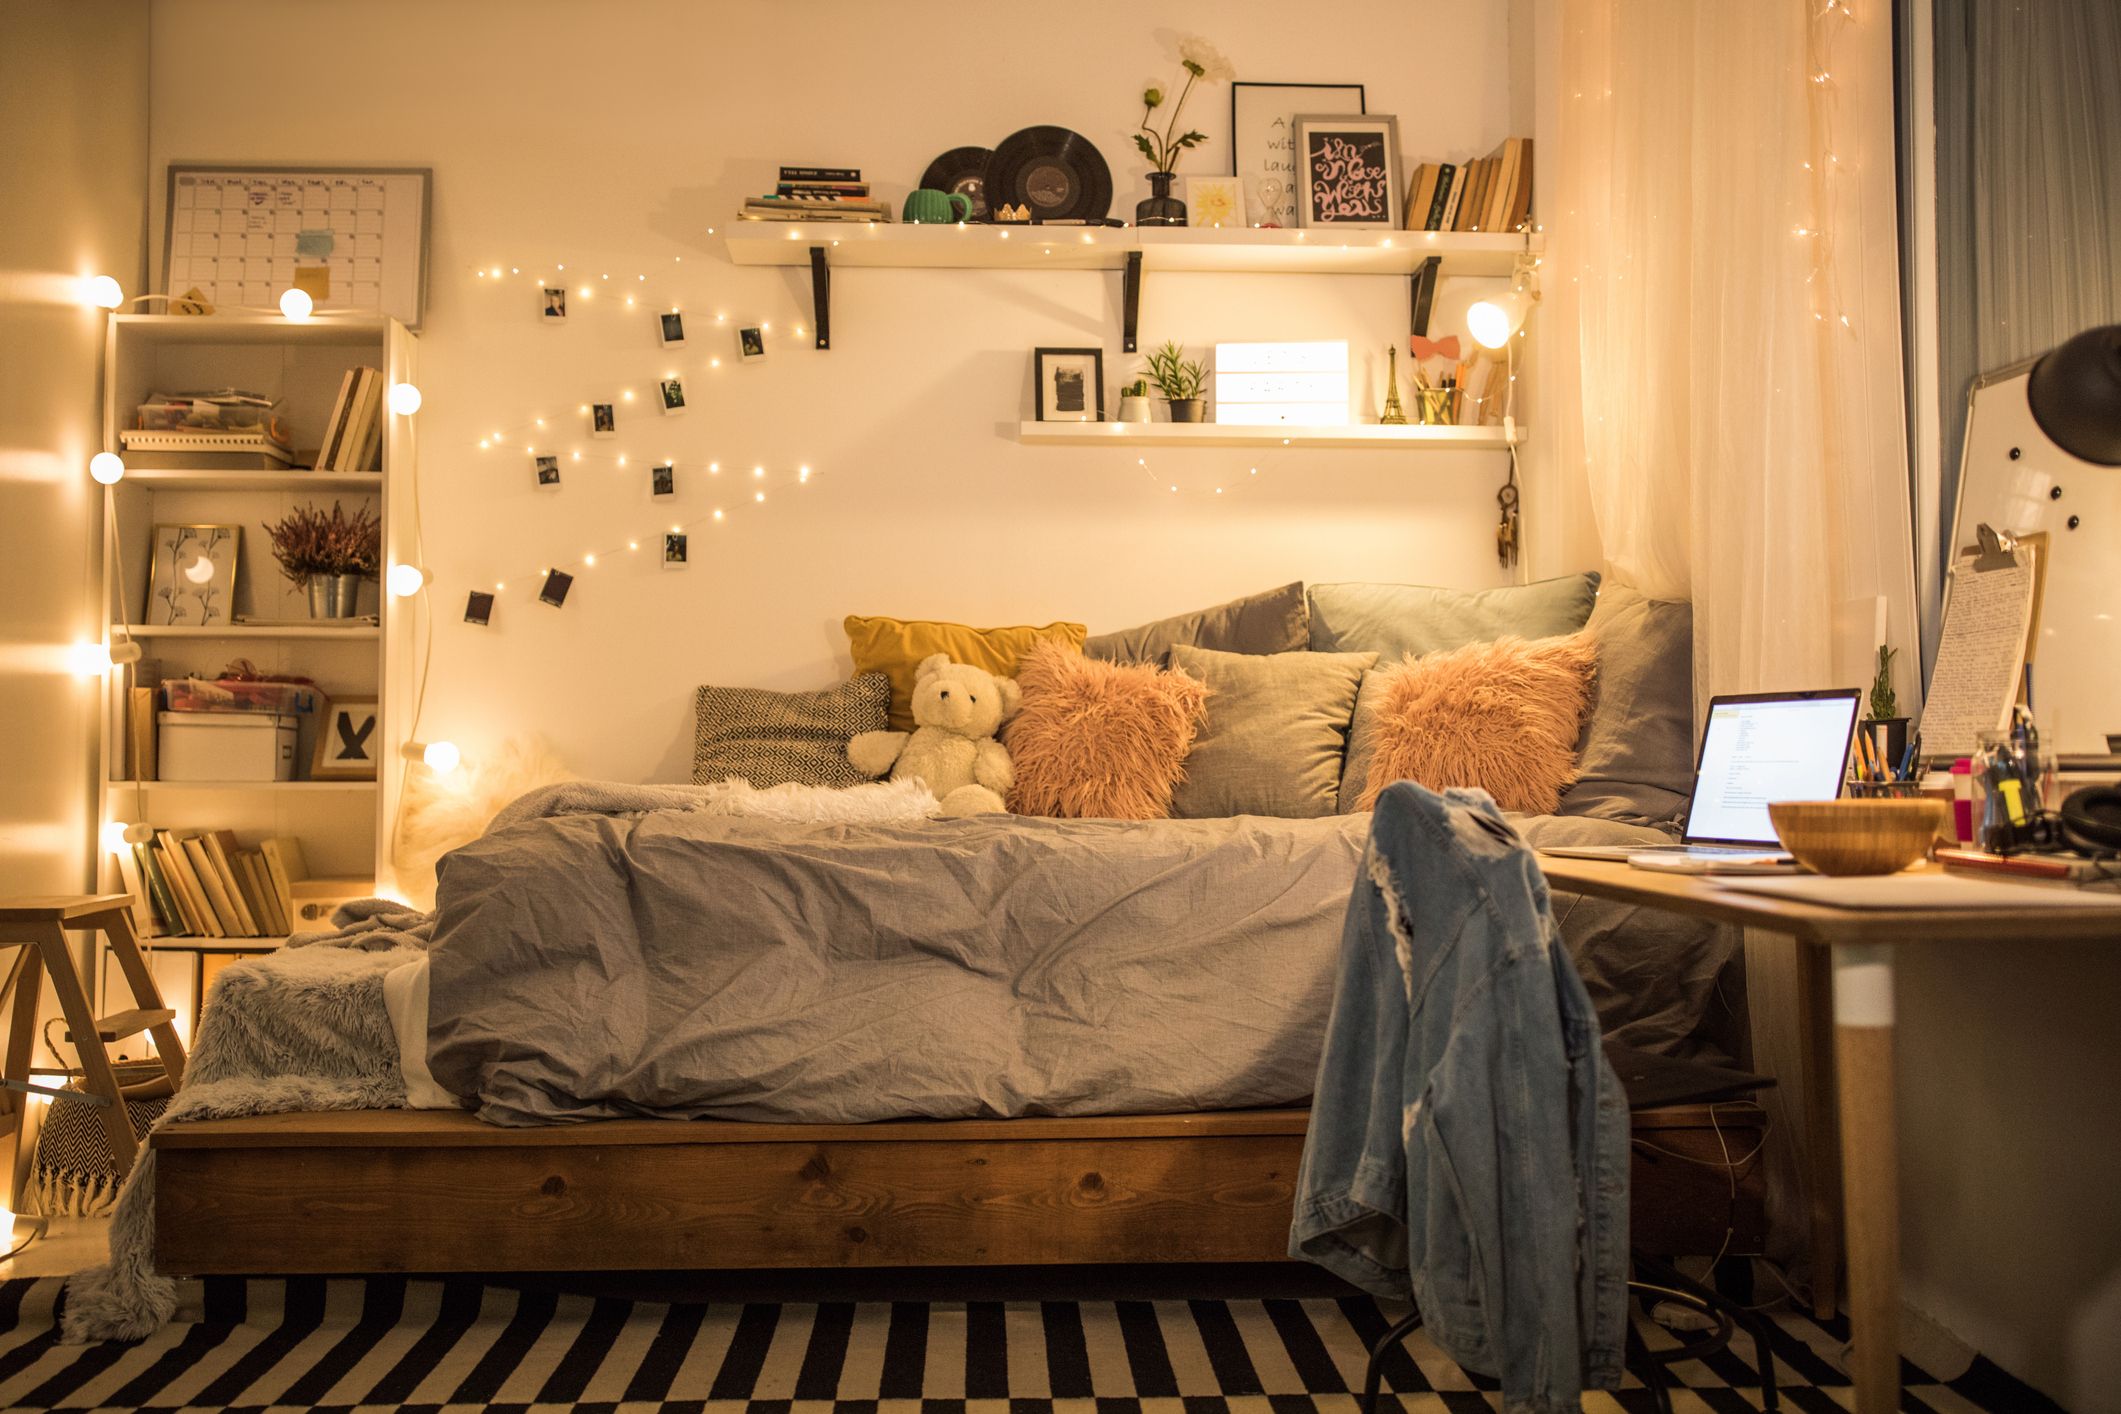 20 dorm room ideas and decor to make halls feel like home